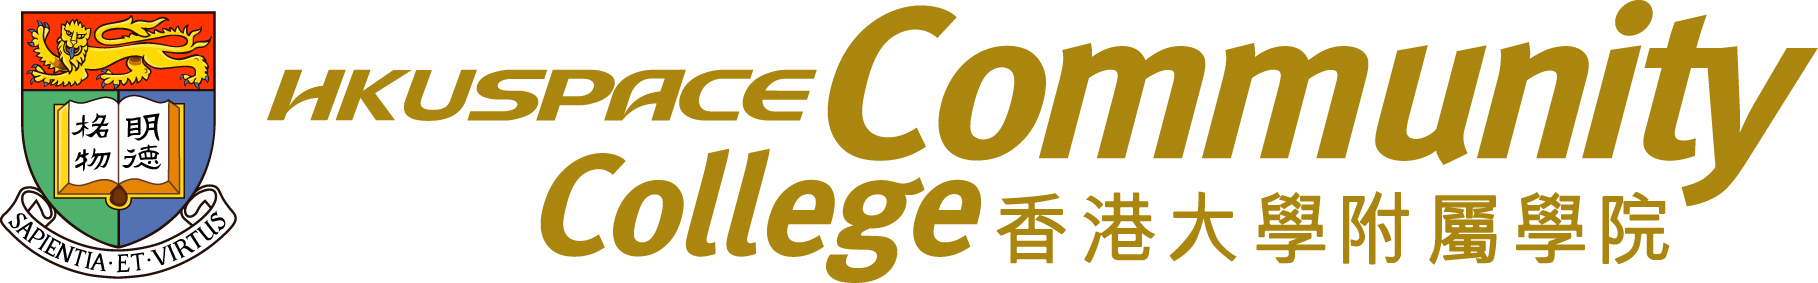 HKUSPACE Community College